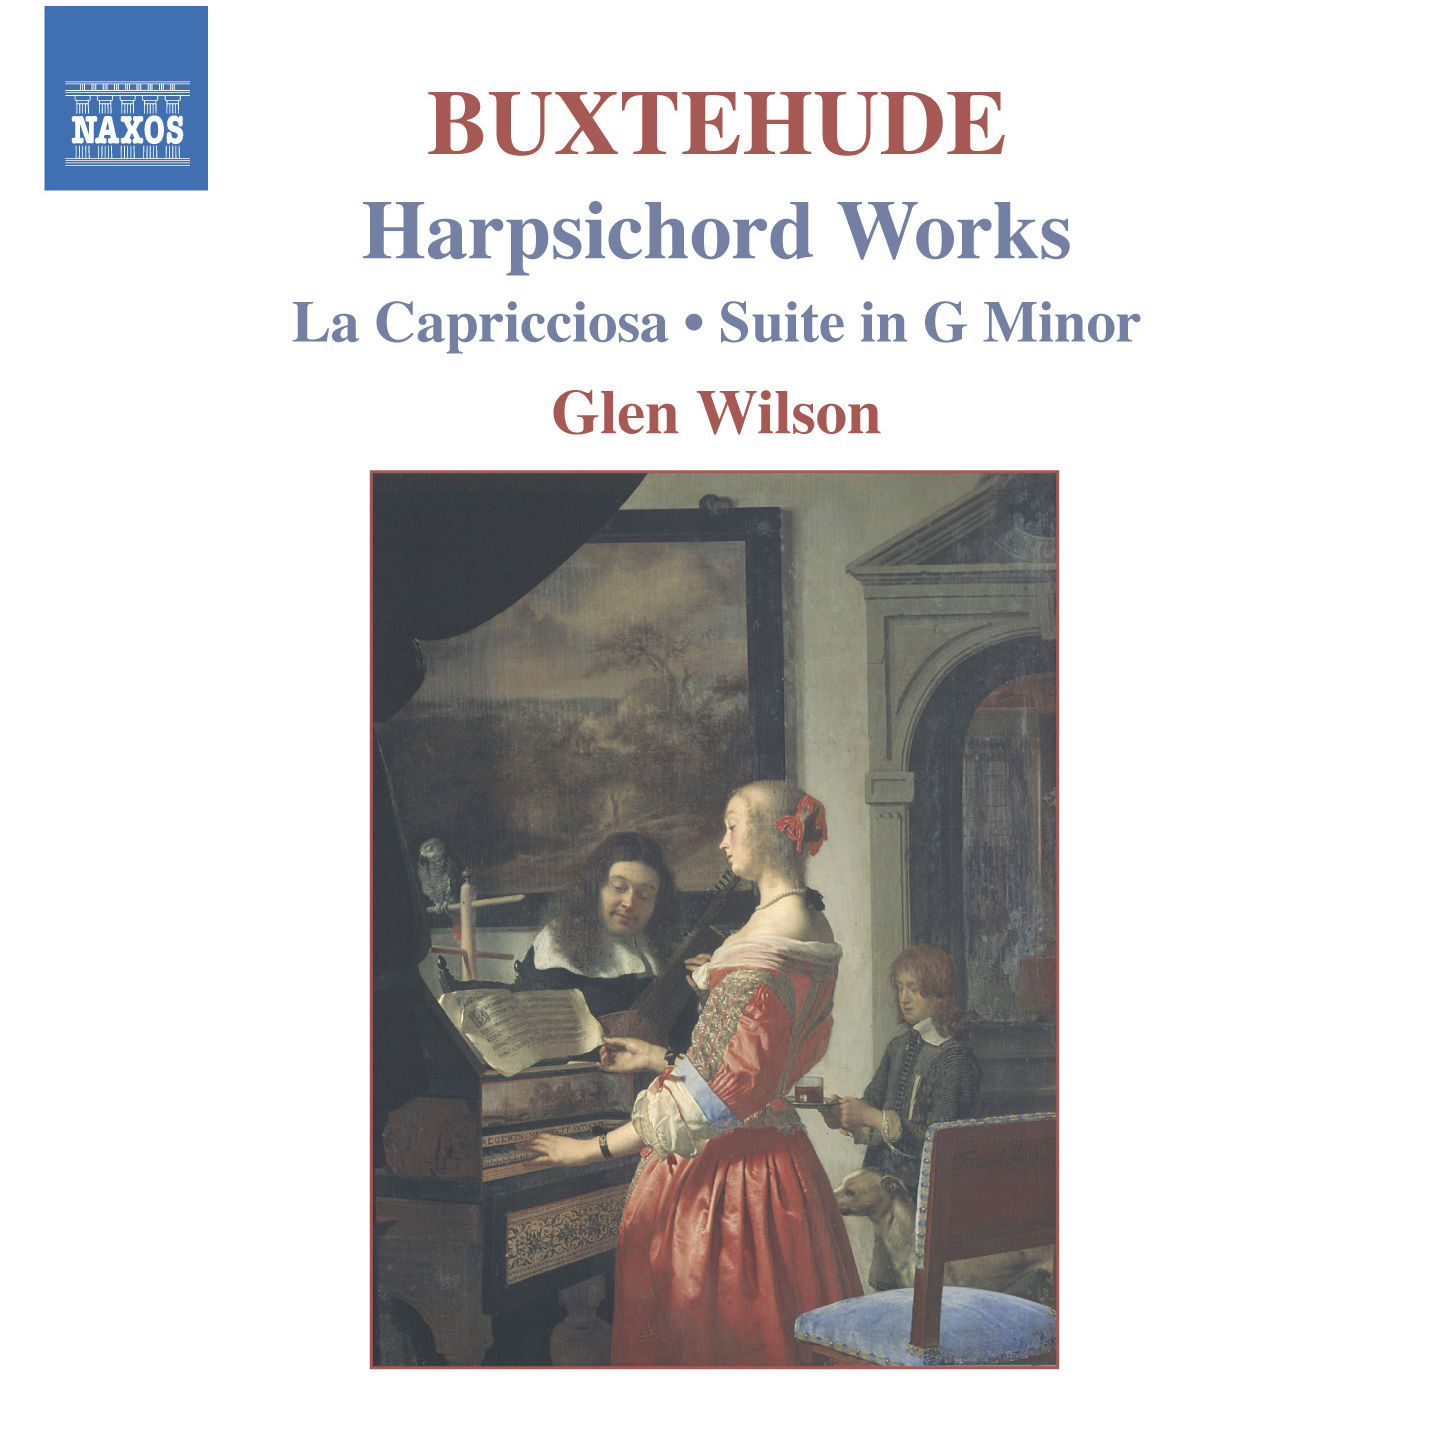 Buxtehude - Harpsichord Works - Glen Wilson